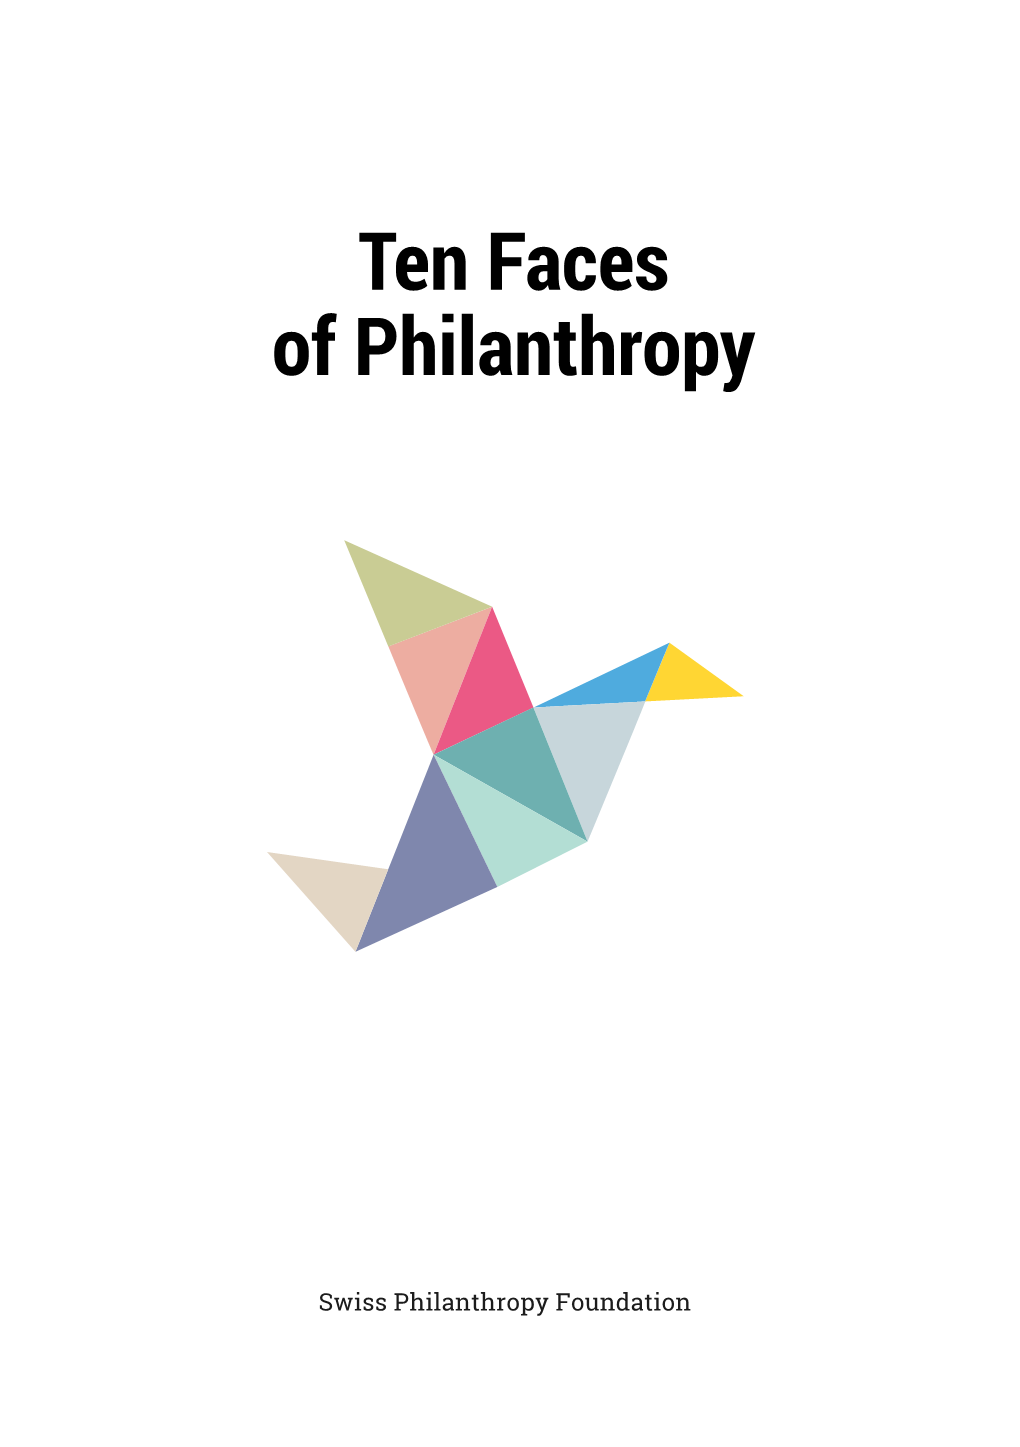 Ten Faces of Philanthropy Contents